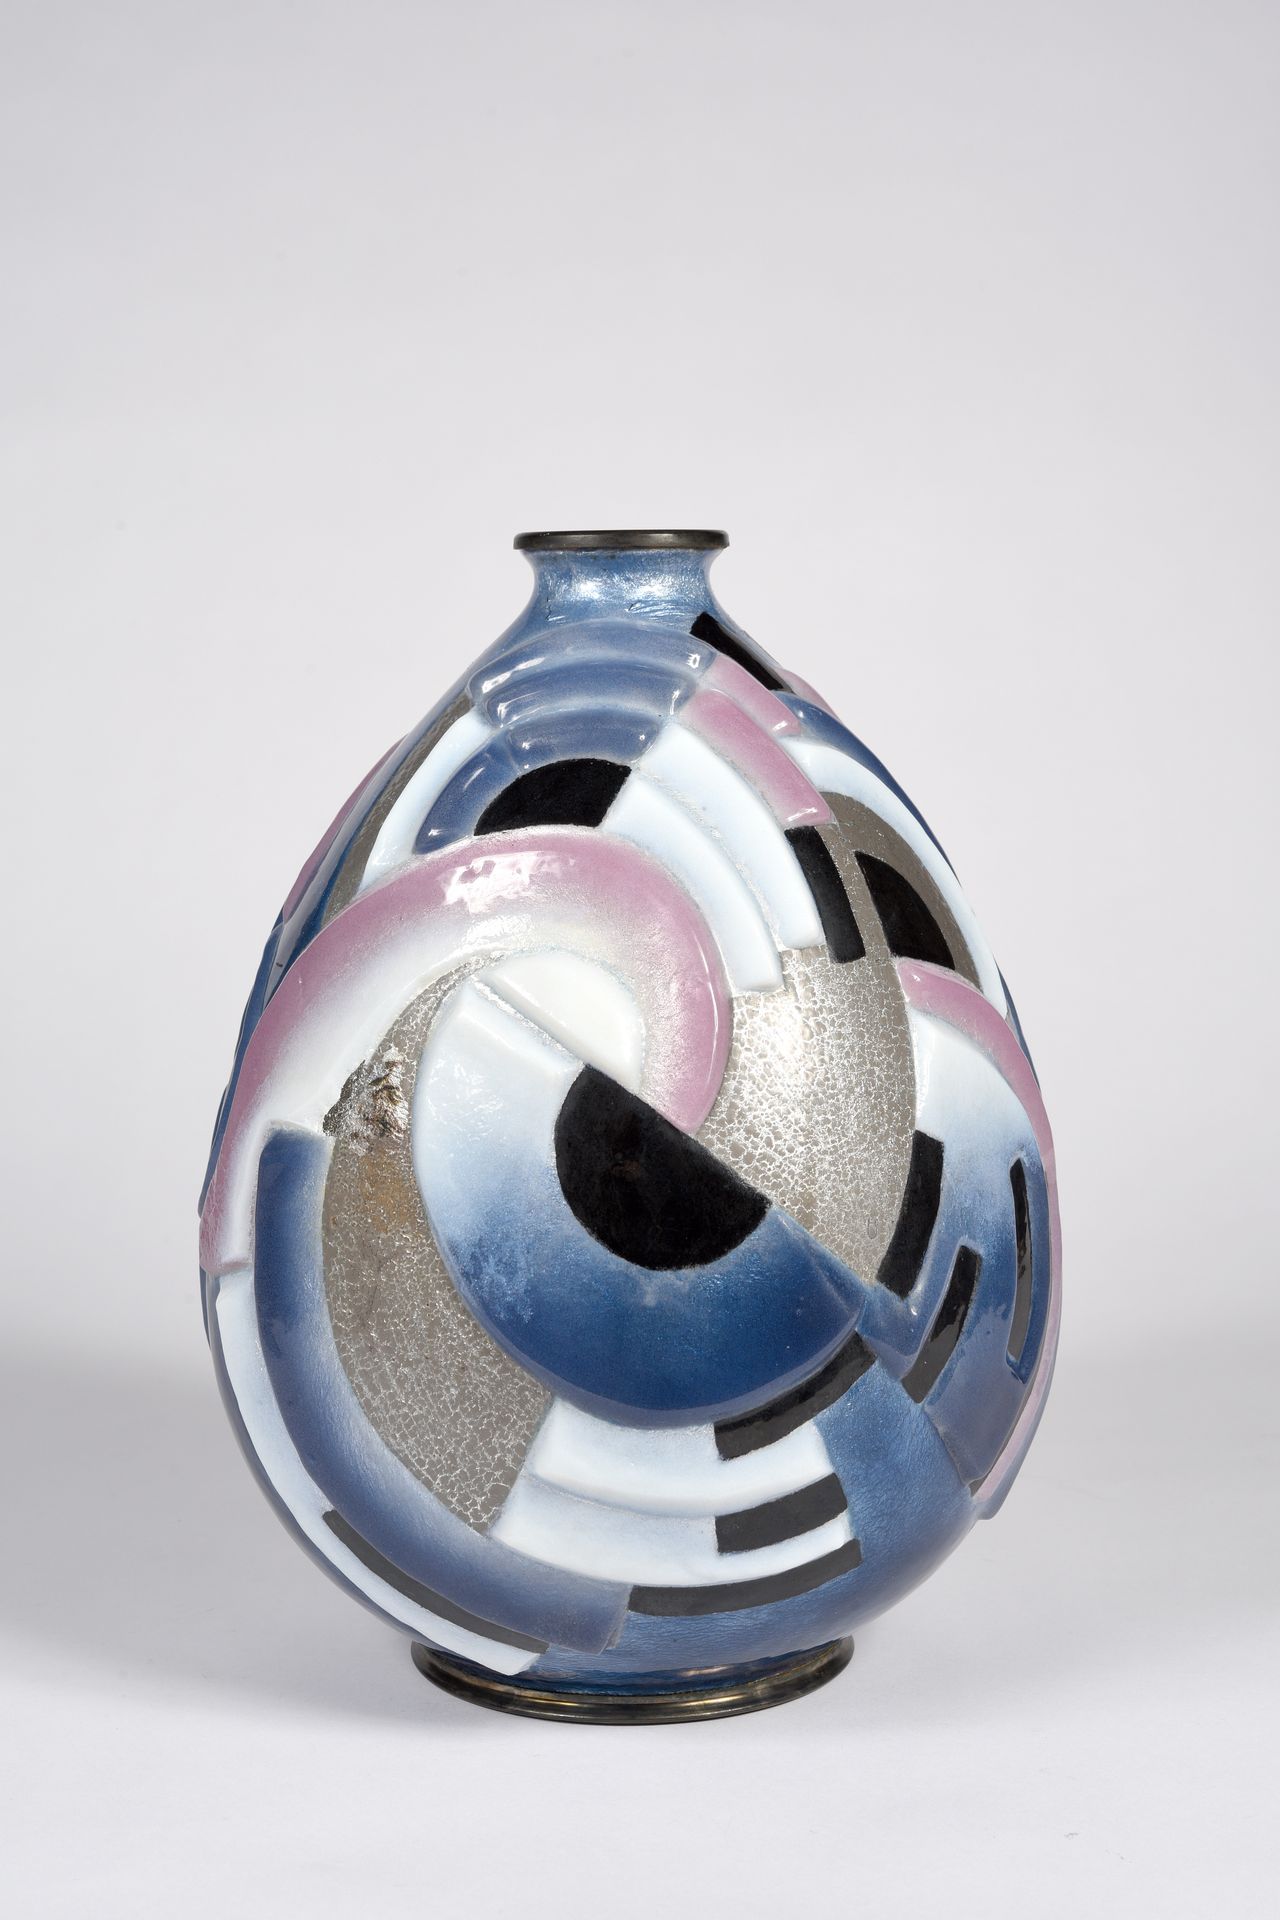 Null 卡米尔-福雷(1874-1956)

花瓶模型" Primerose "。

铜制，身体呈卵圆形，颈部有一个小环。

应用厚重的蓝色、粉红色、黑色、白&hellip;